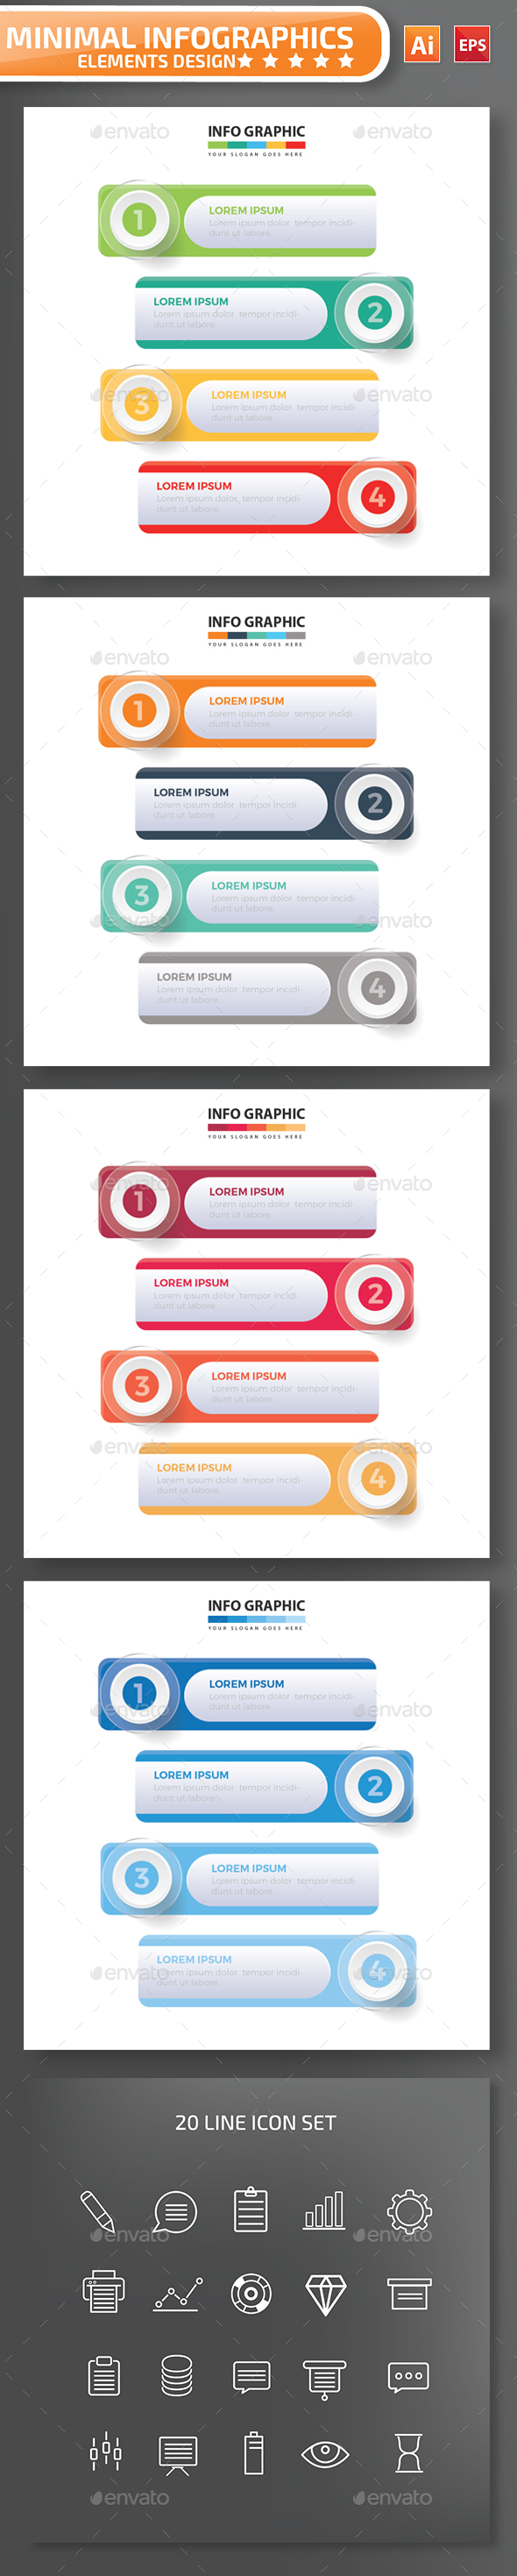 Minimal infographic Design in Infographic Templates